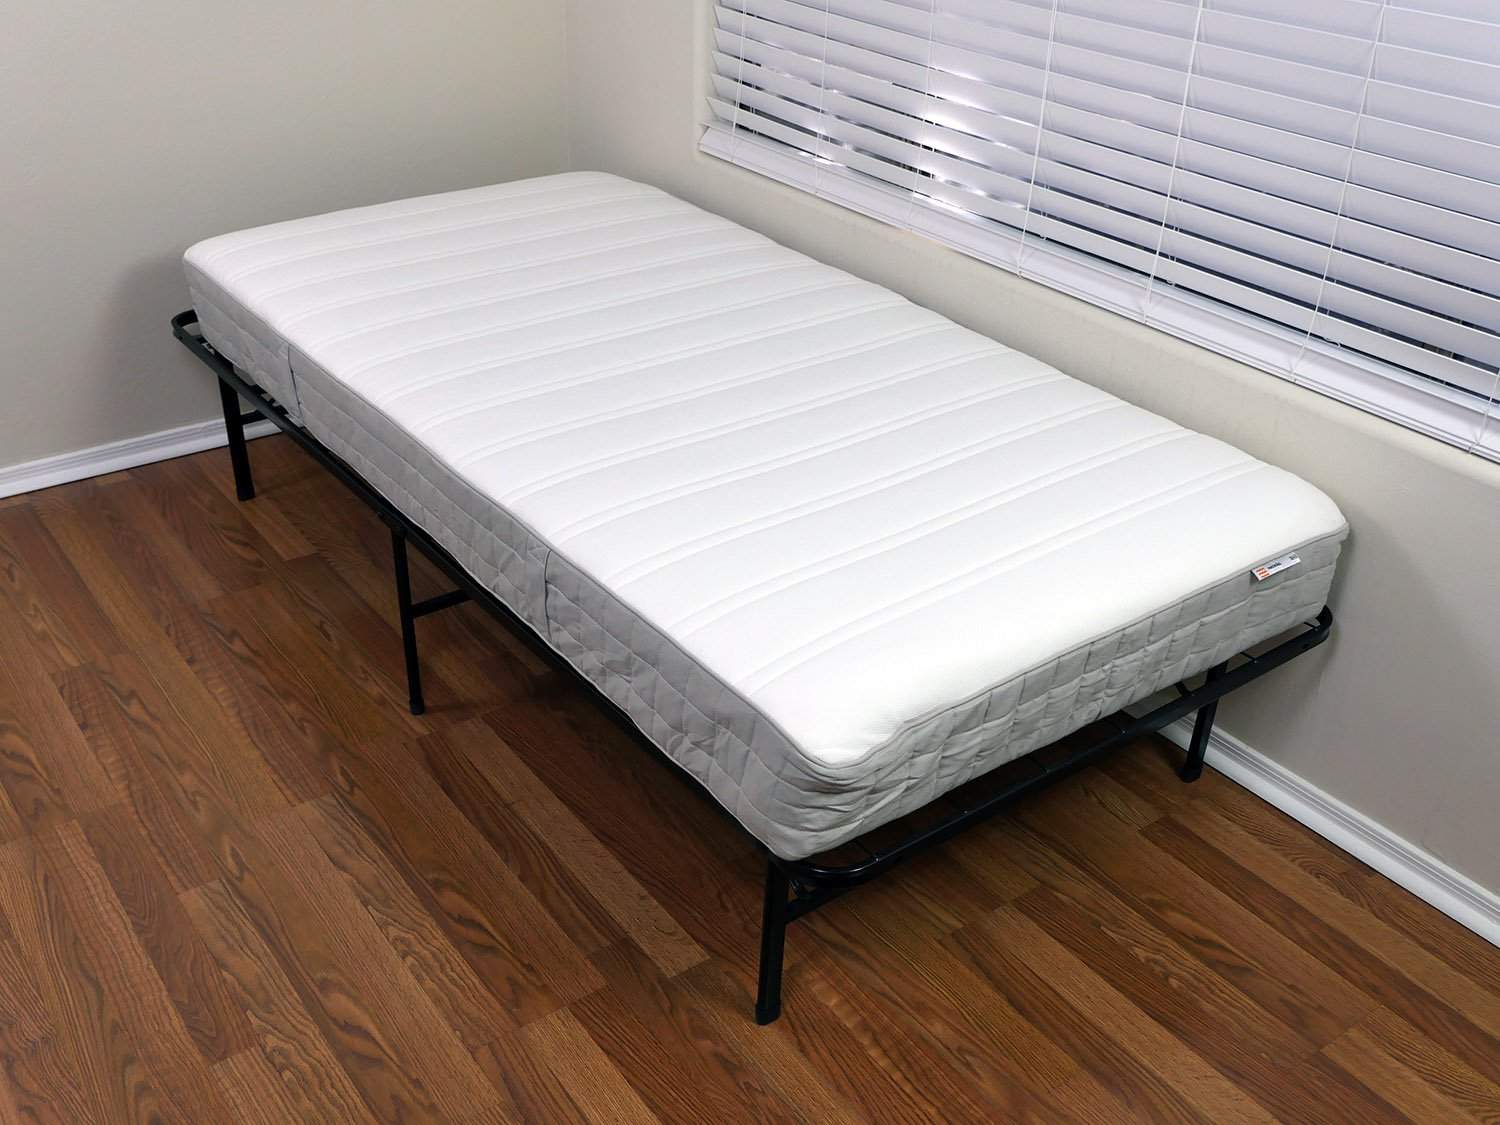 ikea bed mattress guarantee